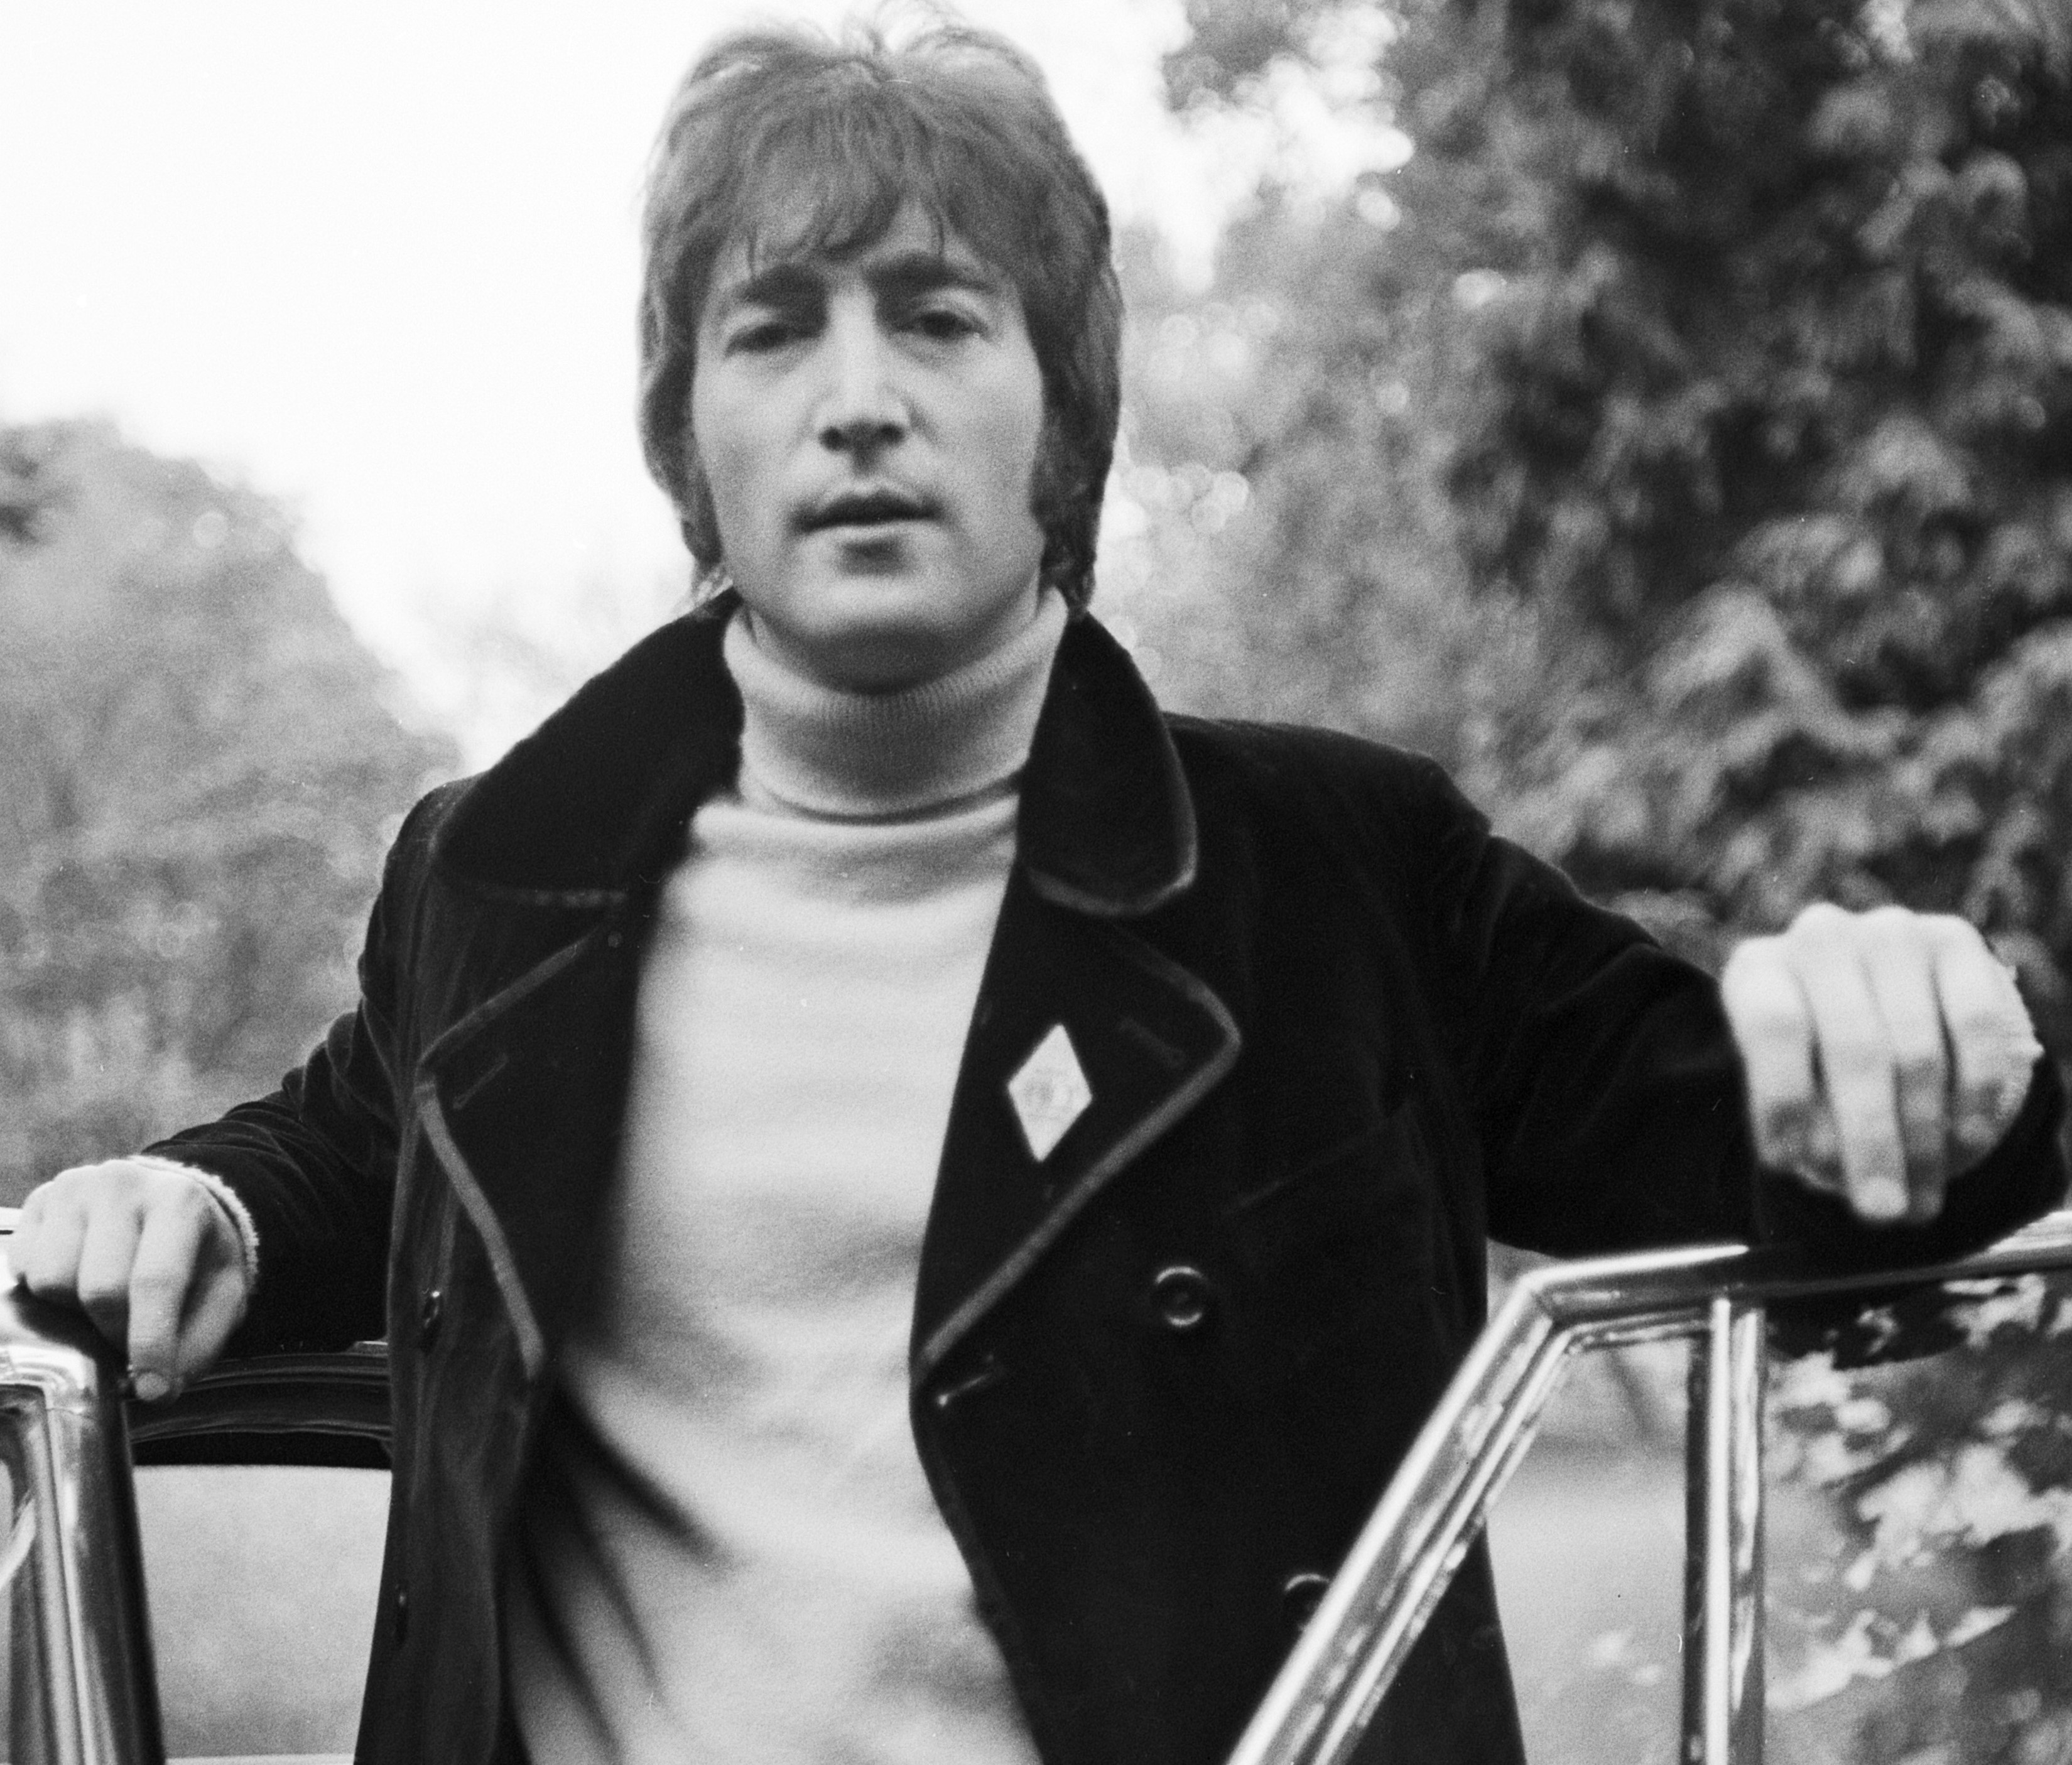 "Jealous Guy" singer John Lennon by a car